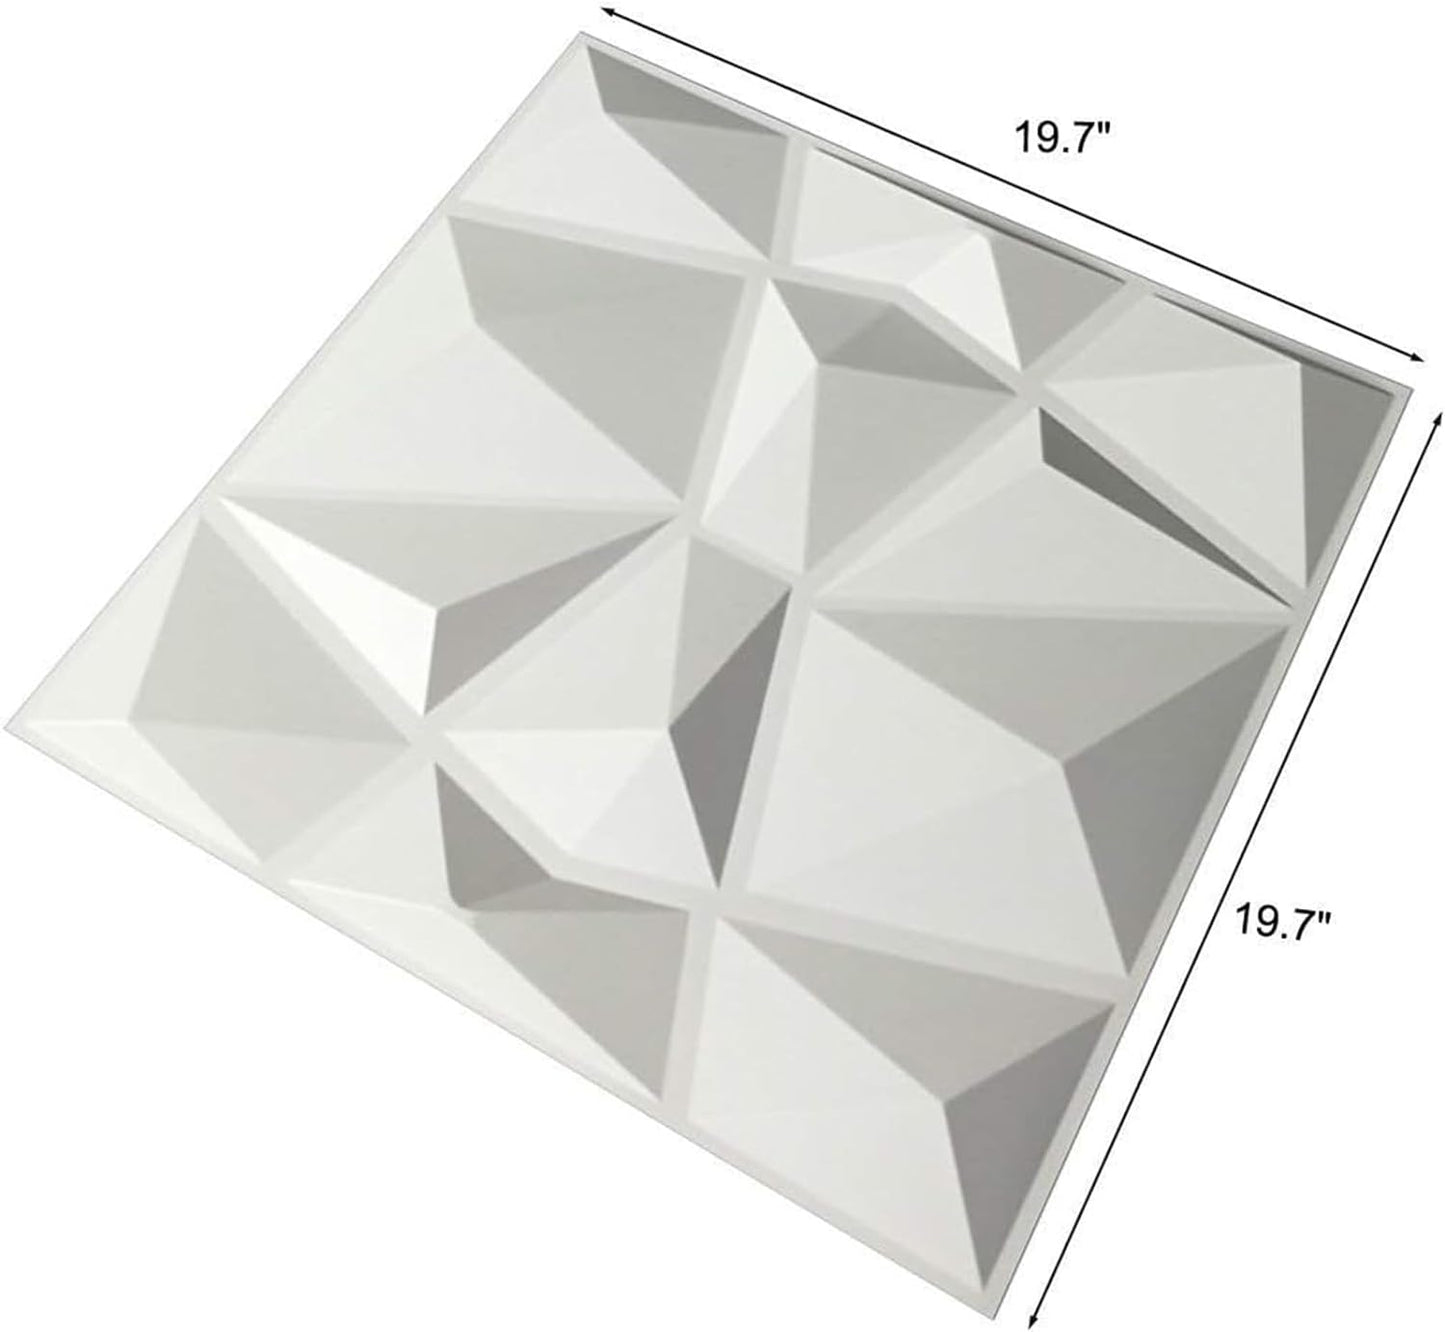 Art3d Textures 3D Wall Panels White Diamond Design Pack of 12 Tiles 32 Sq Ft (PVC)